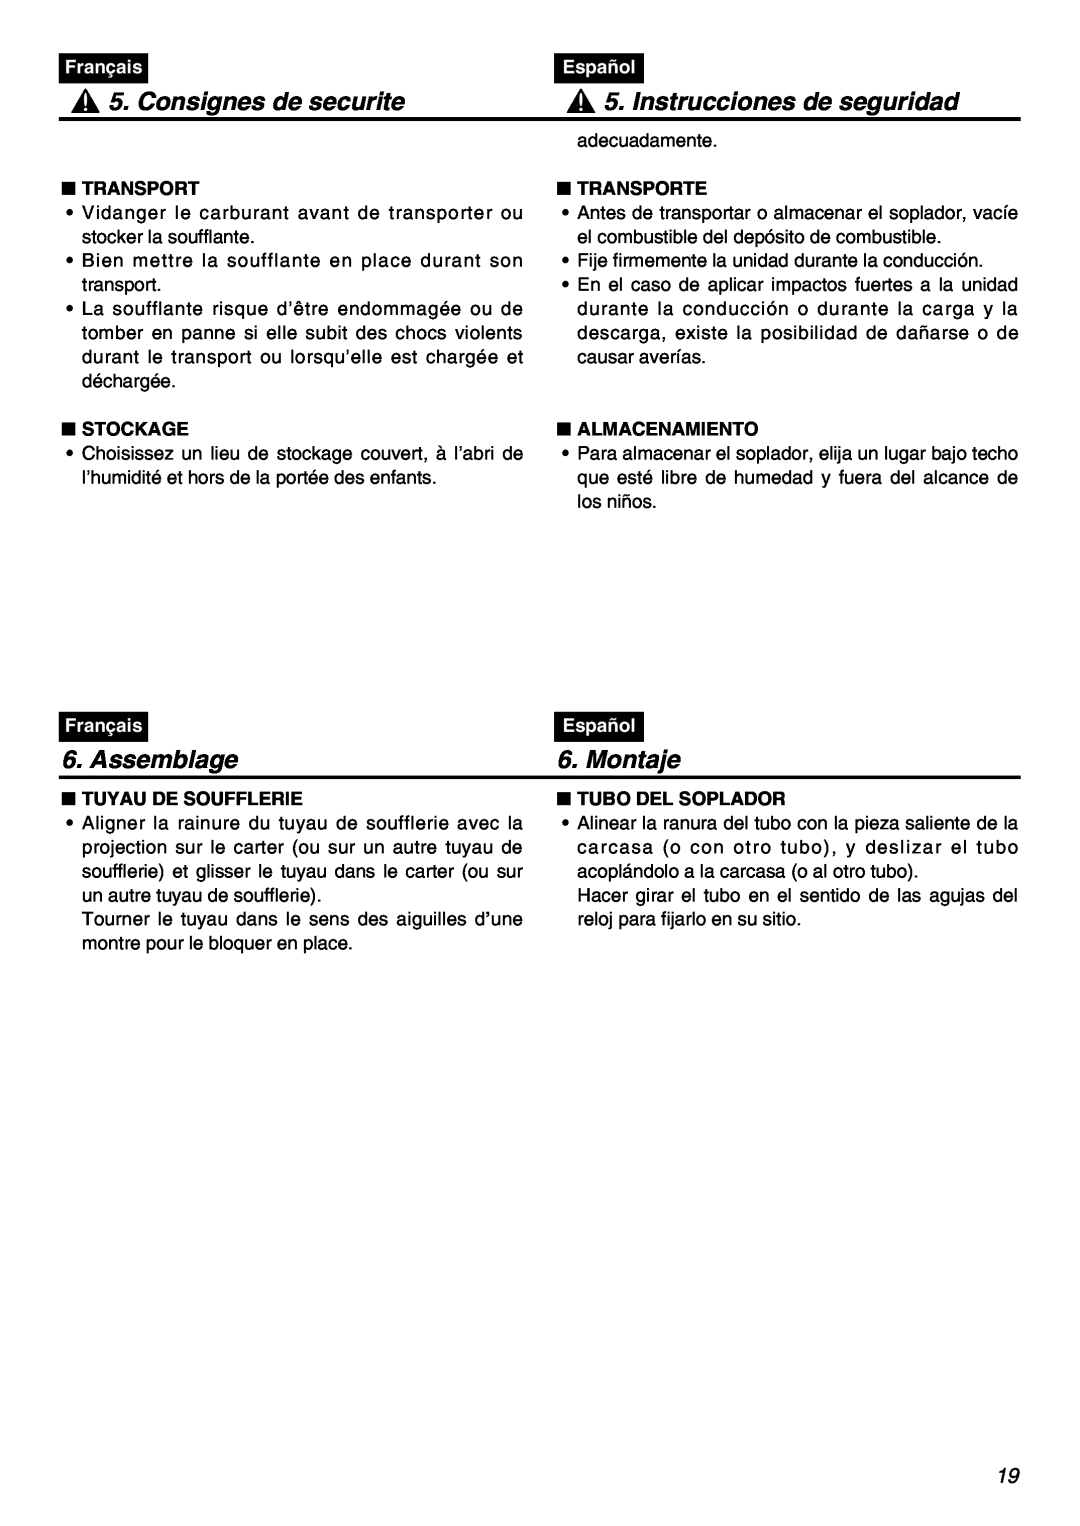 RedMax HBZ2601 Assemblage, Montaje, Consignes de securite, Instrucciones de seguridad, Français, Español, adecuadamente 